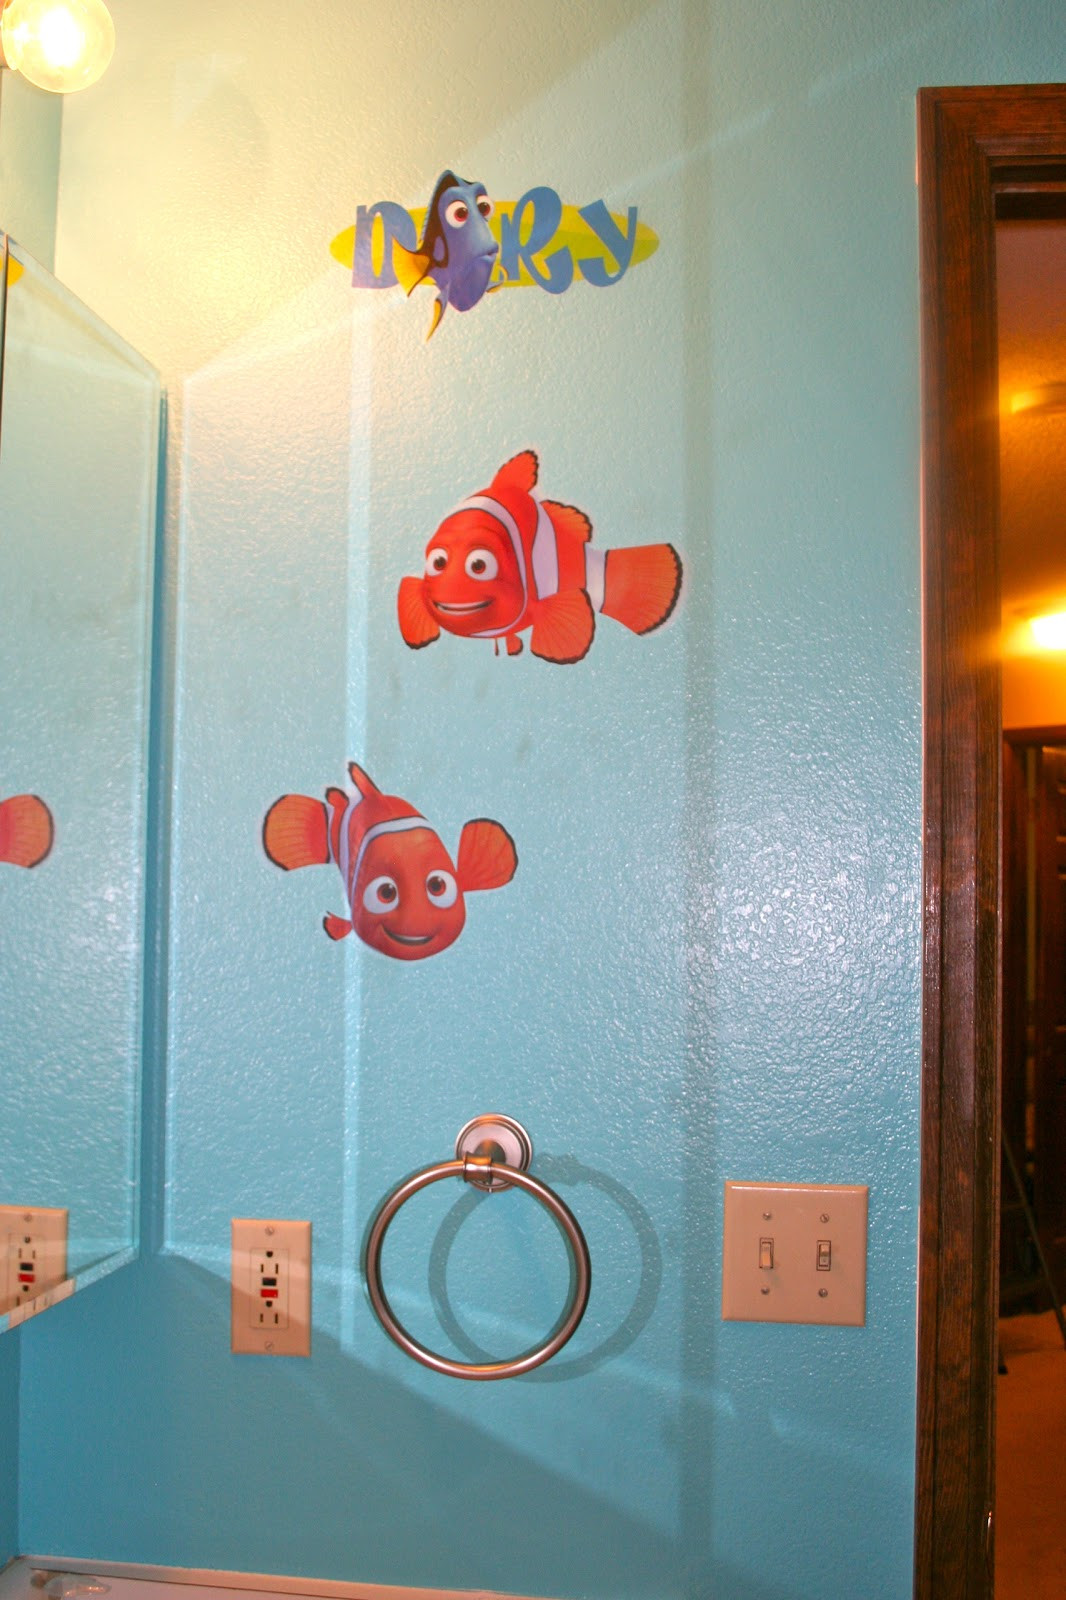 Finding Dory Bathroom Decor
 Staying Crafty The Finding Nemo Bathroom